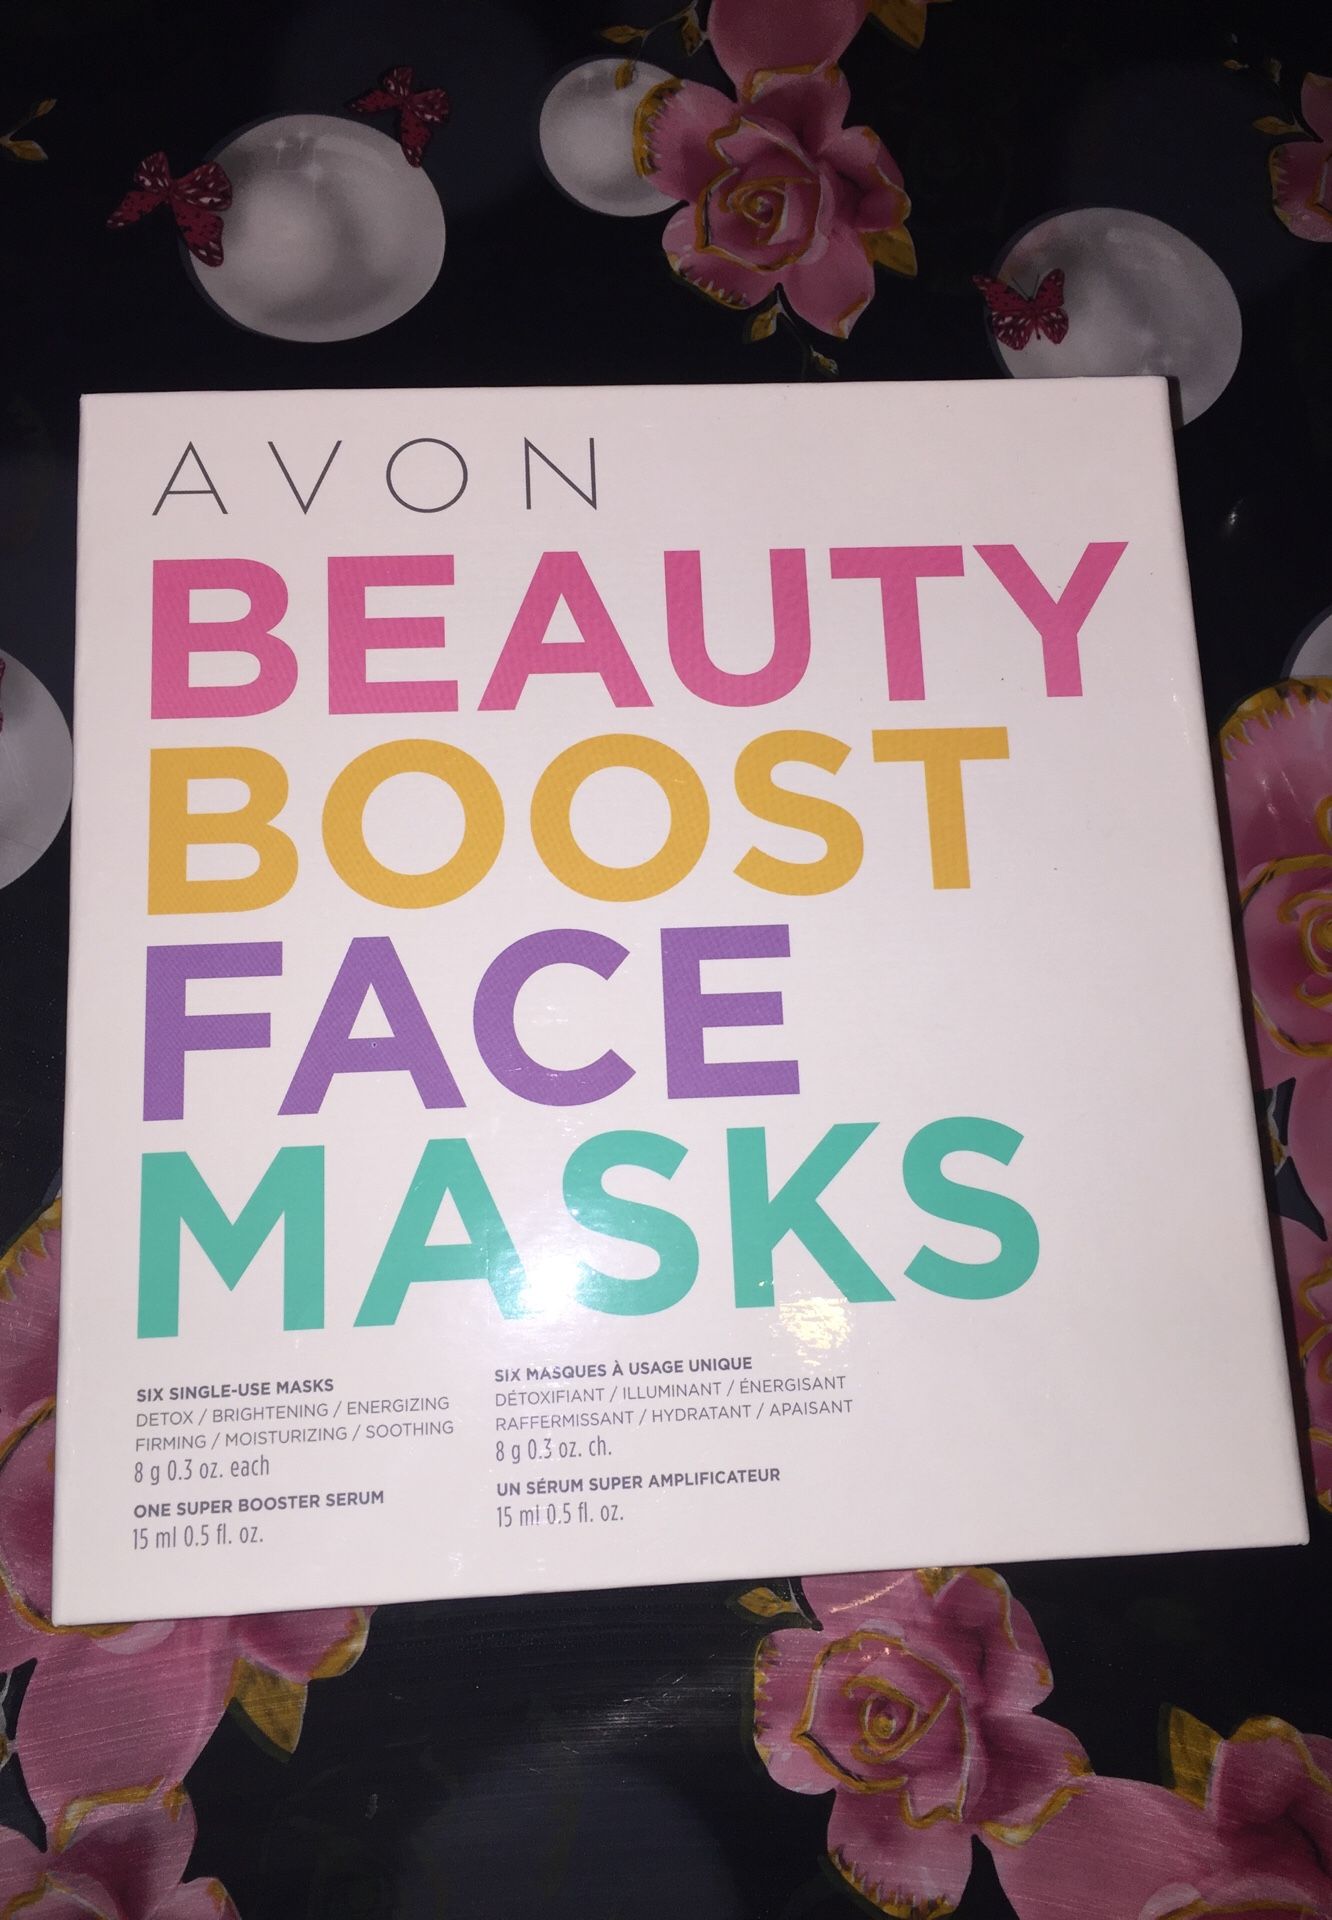 Beauty boost face masks